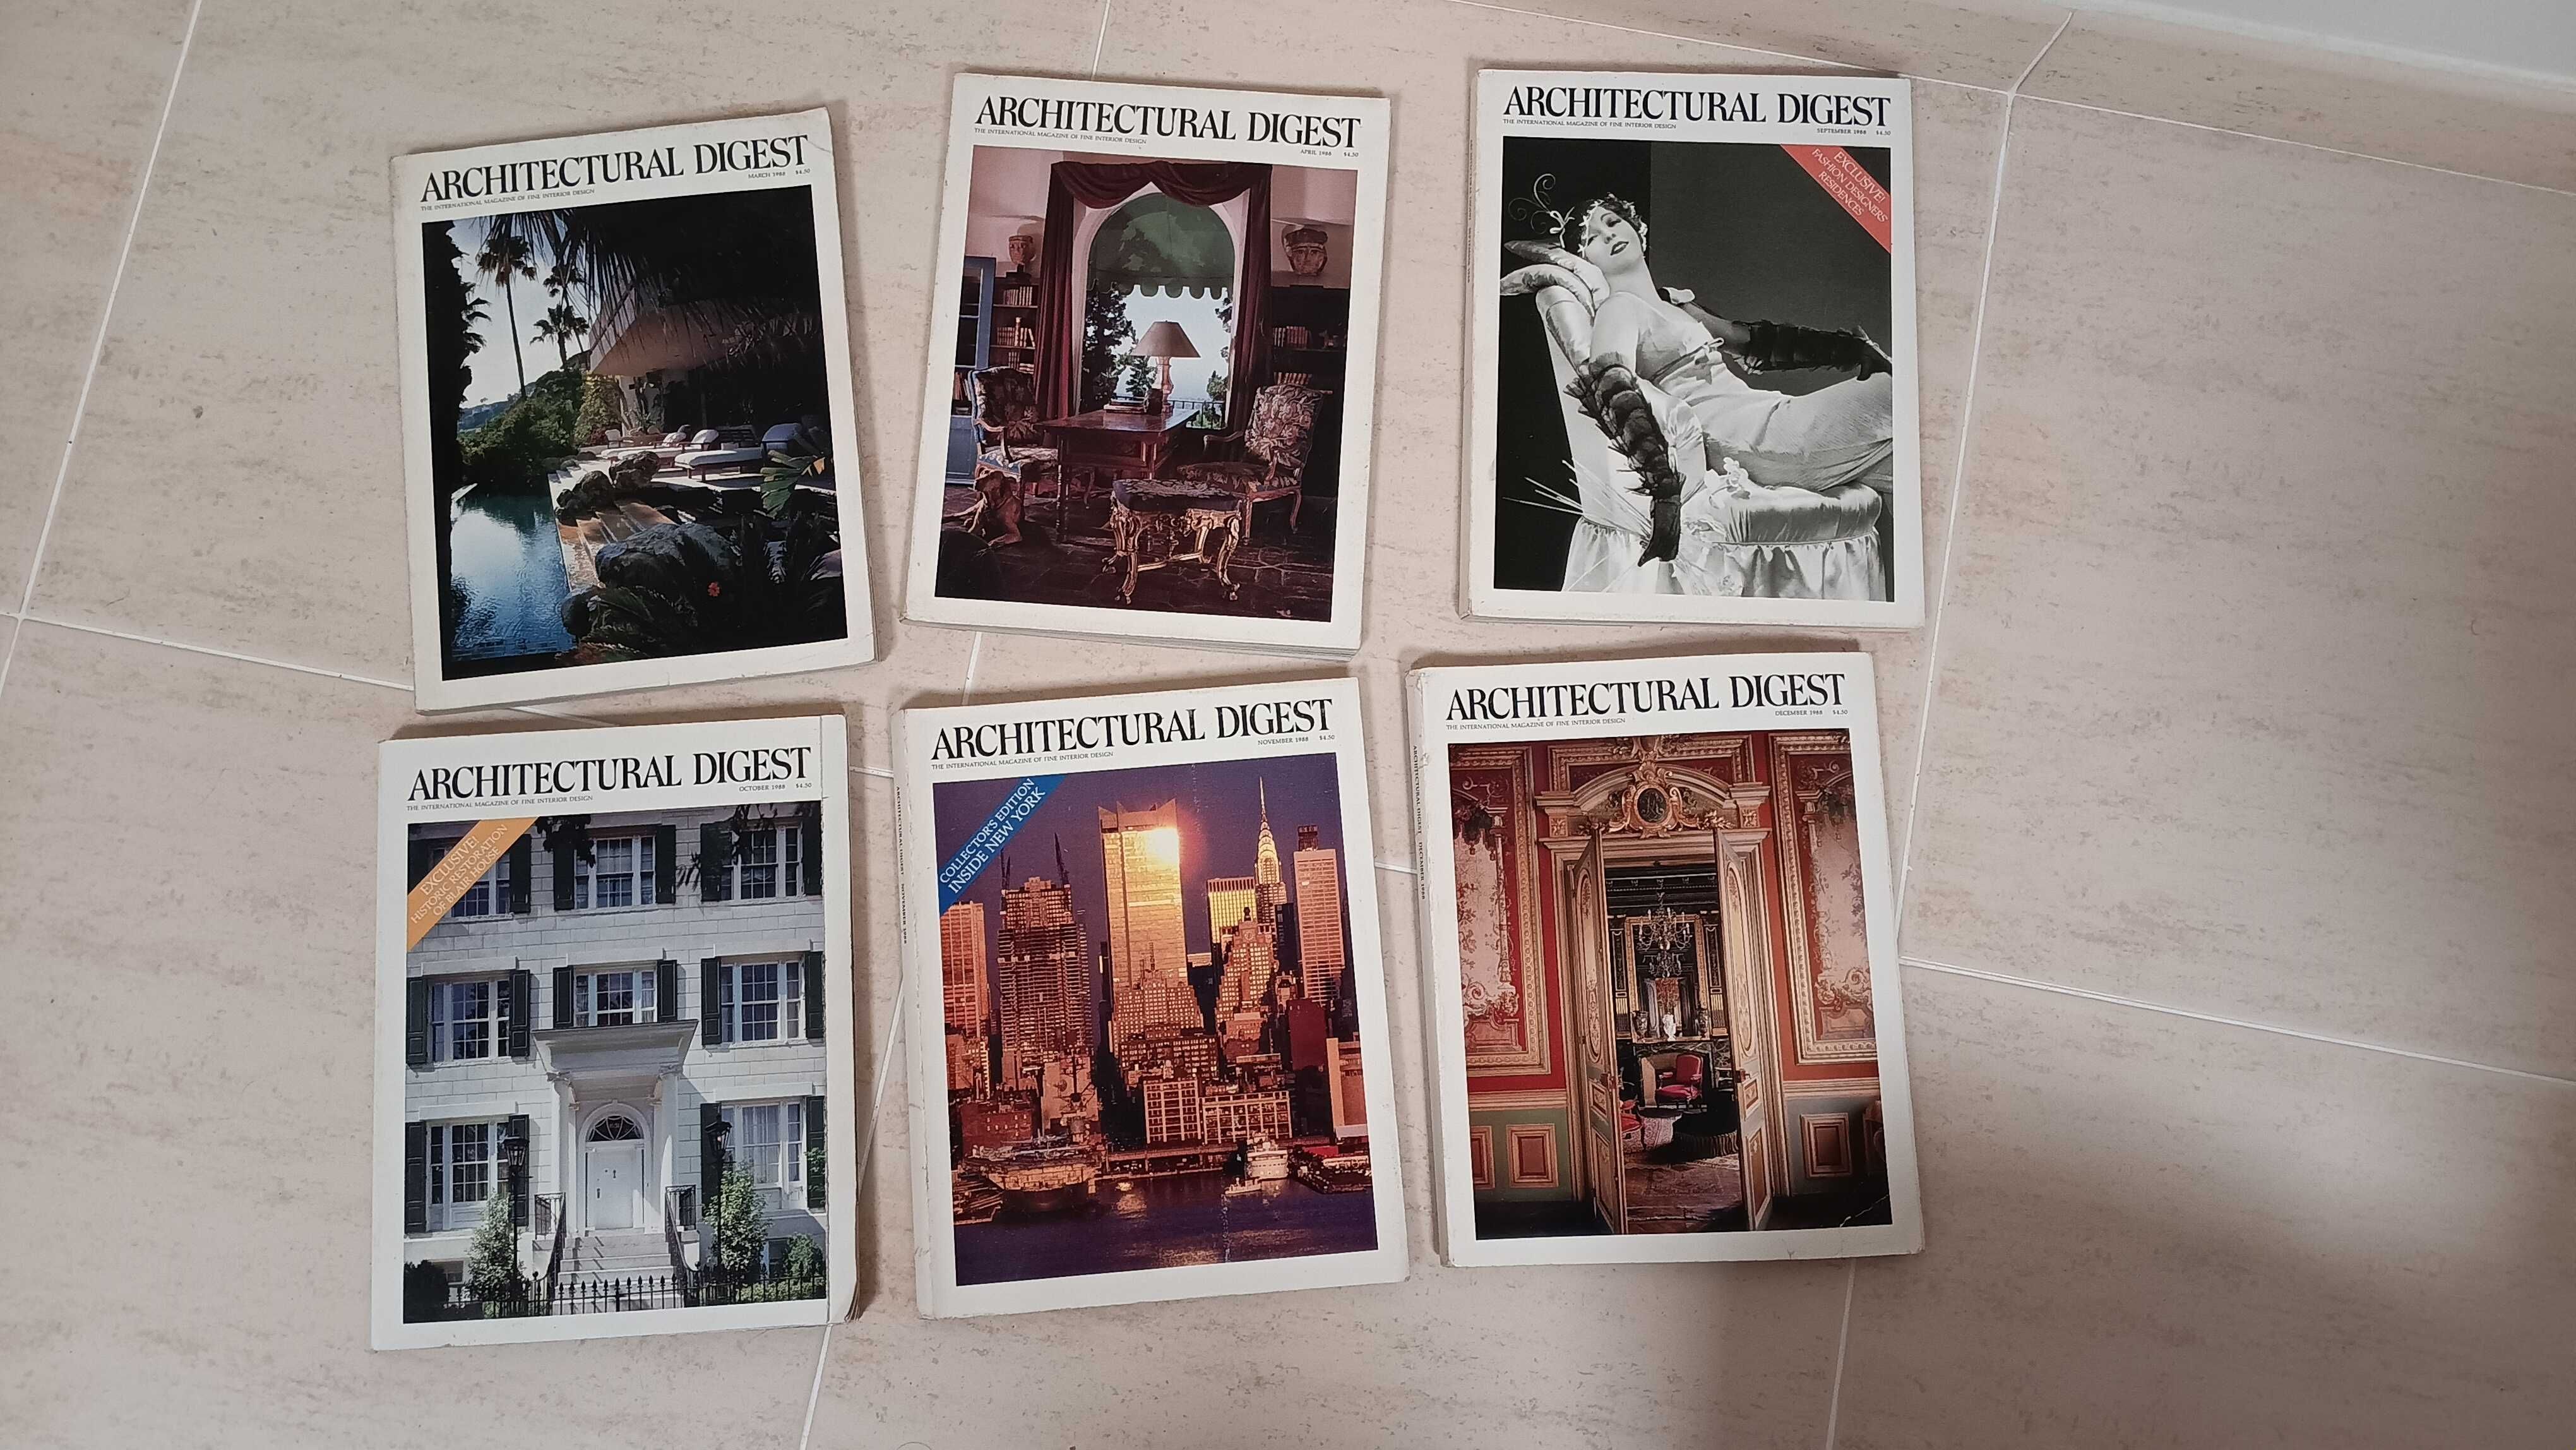 24 Revistas "Architectural Digest" de 1982 a 1996 | preços desde 6€